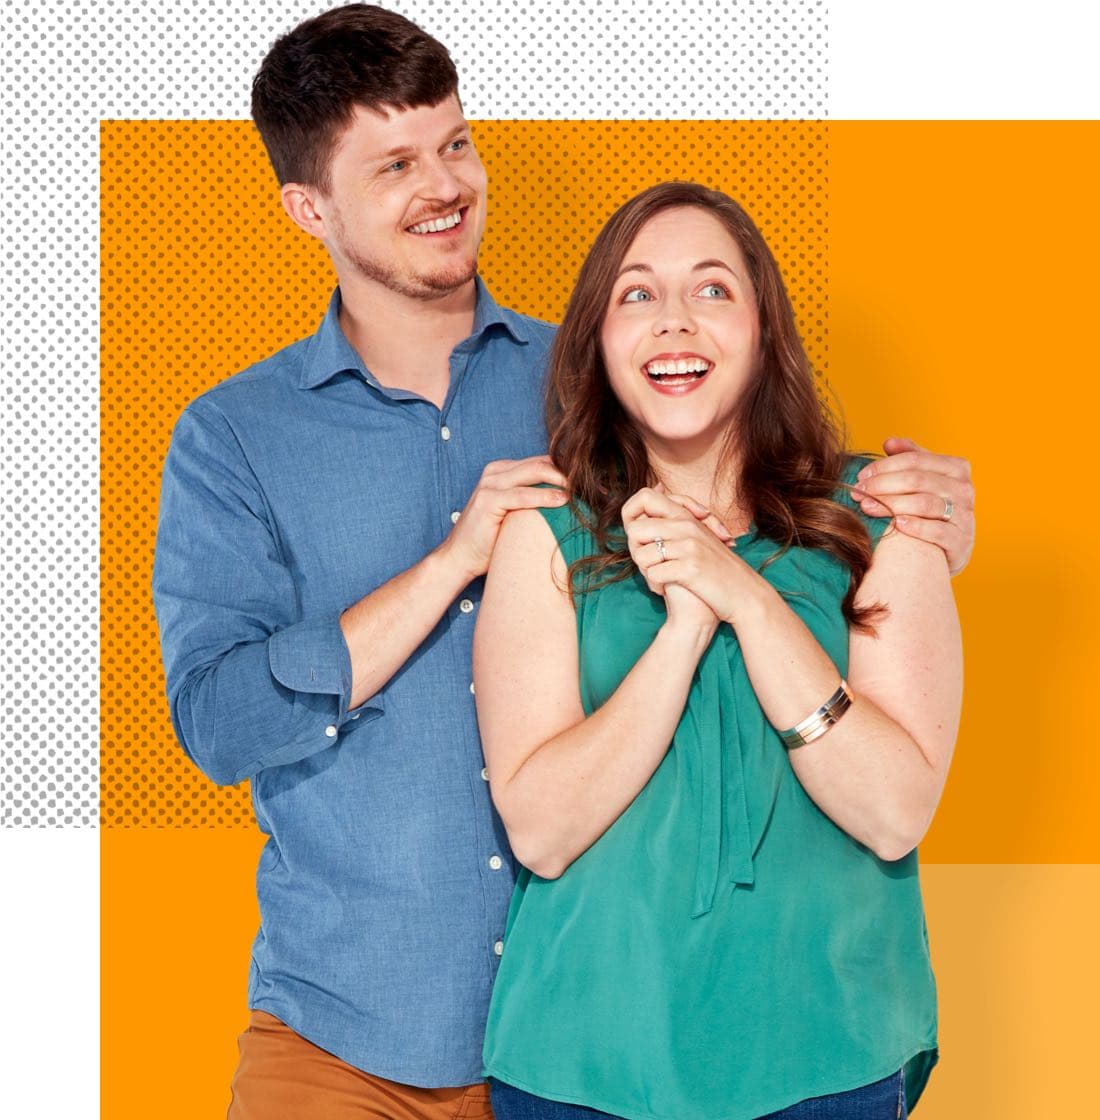 Megan & Andrew, Affinity Plus members, on an orange background